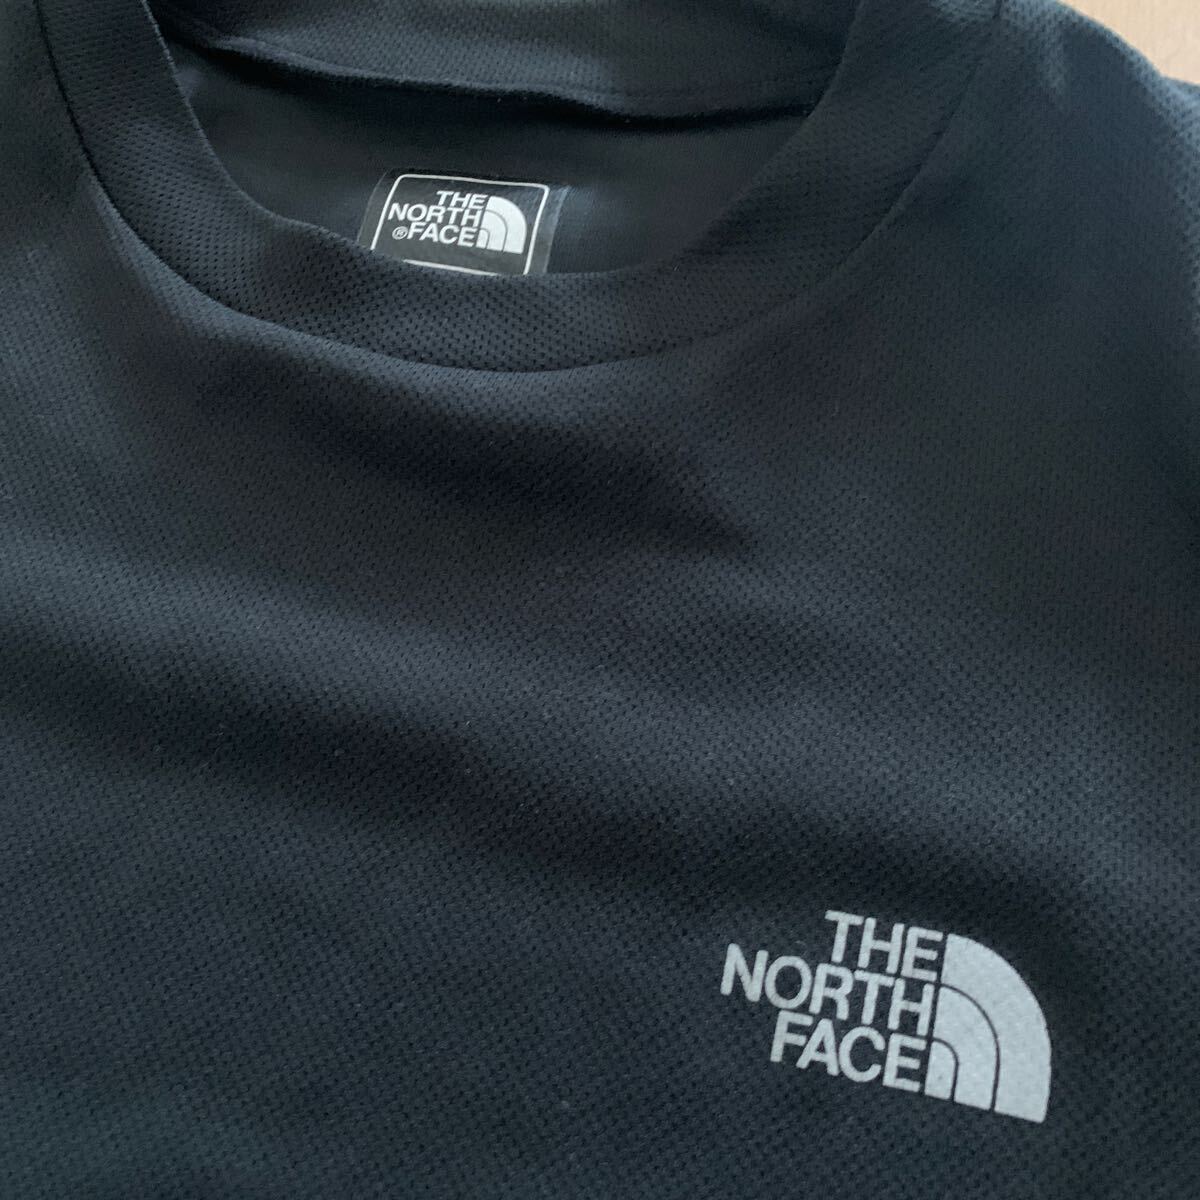 【THE NORTH FACE】ザ ノースフェイス Flight Series 化繊Tシャツ M NT30817 ブラック 登山 アウトドア トレッキングの画像2